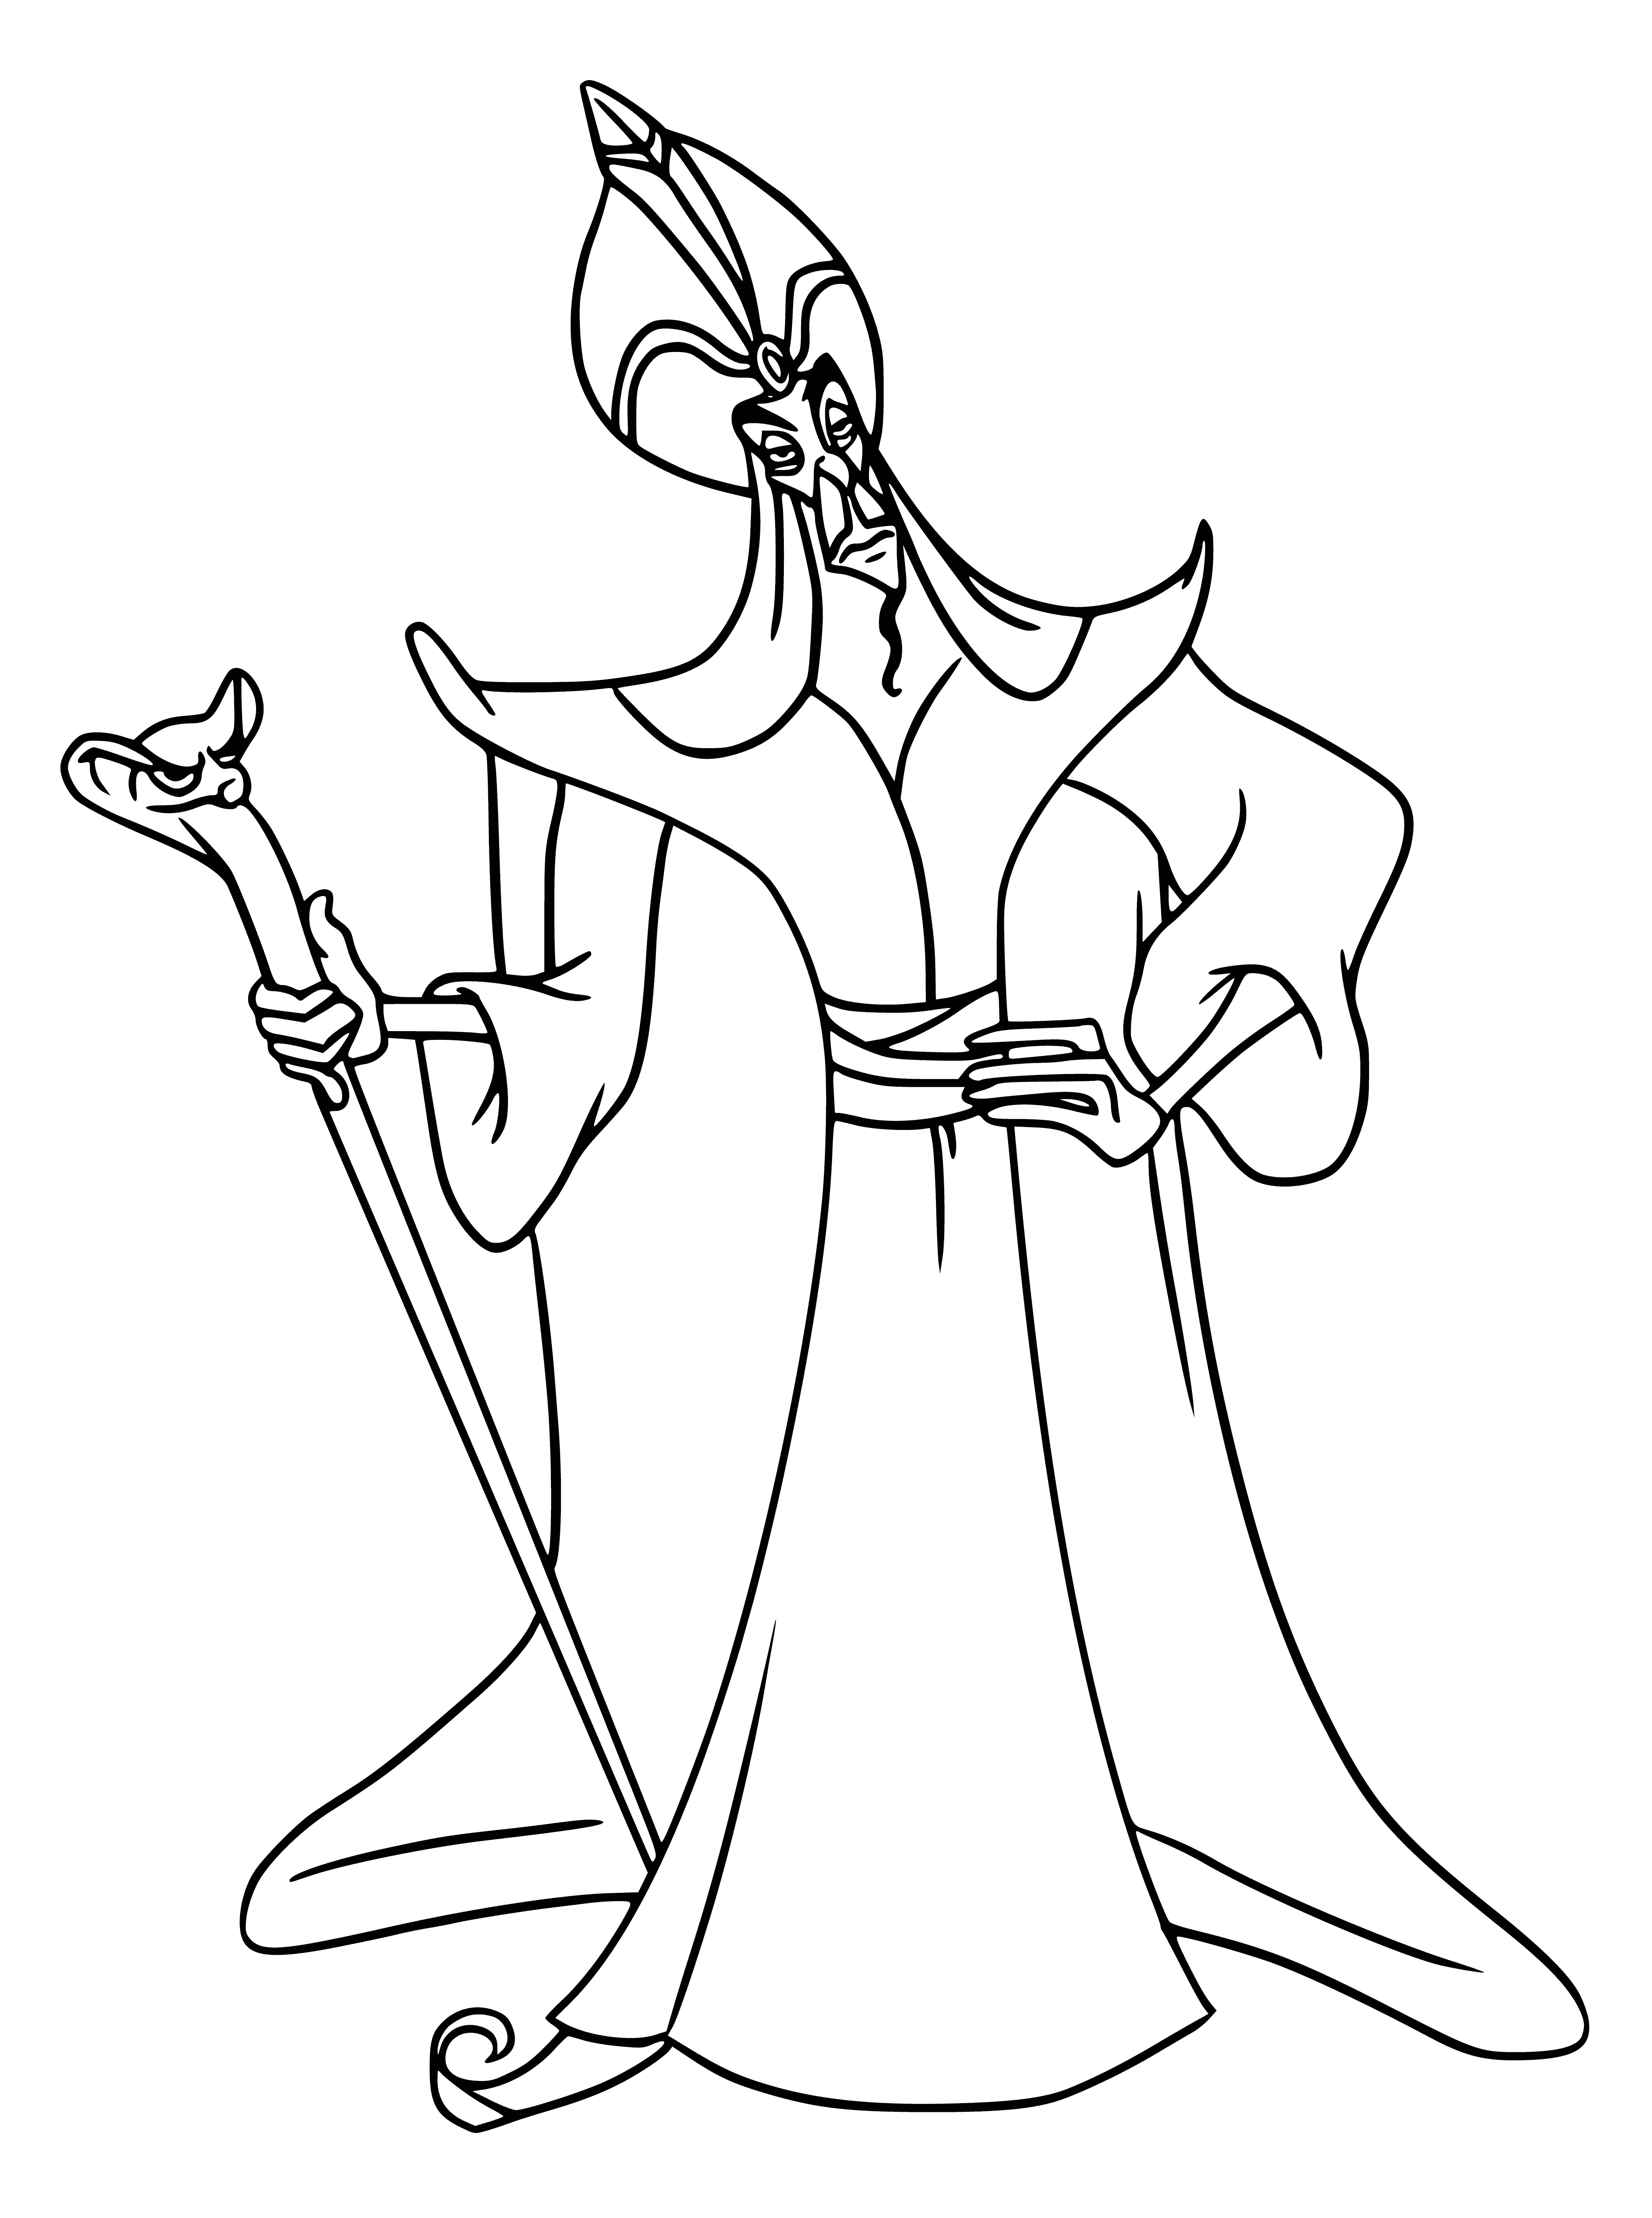 Villain Jafar coloring page